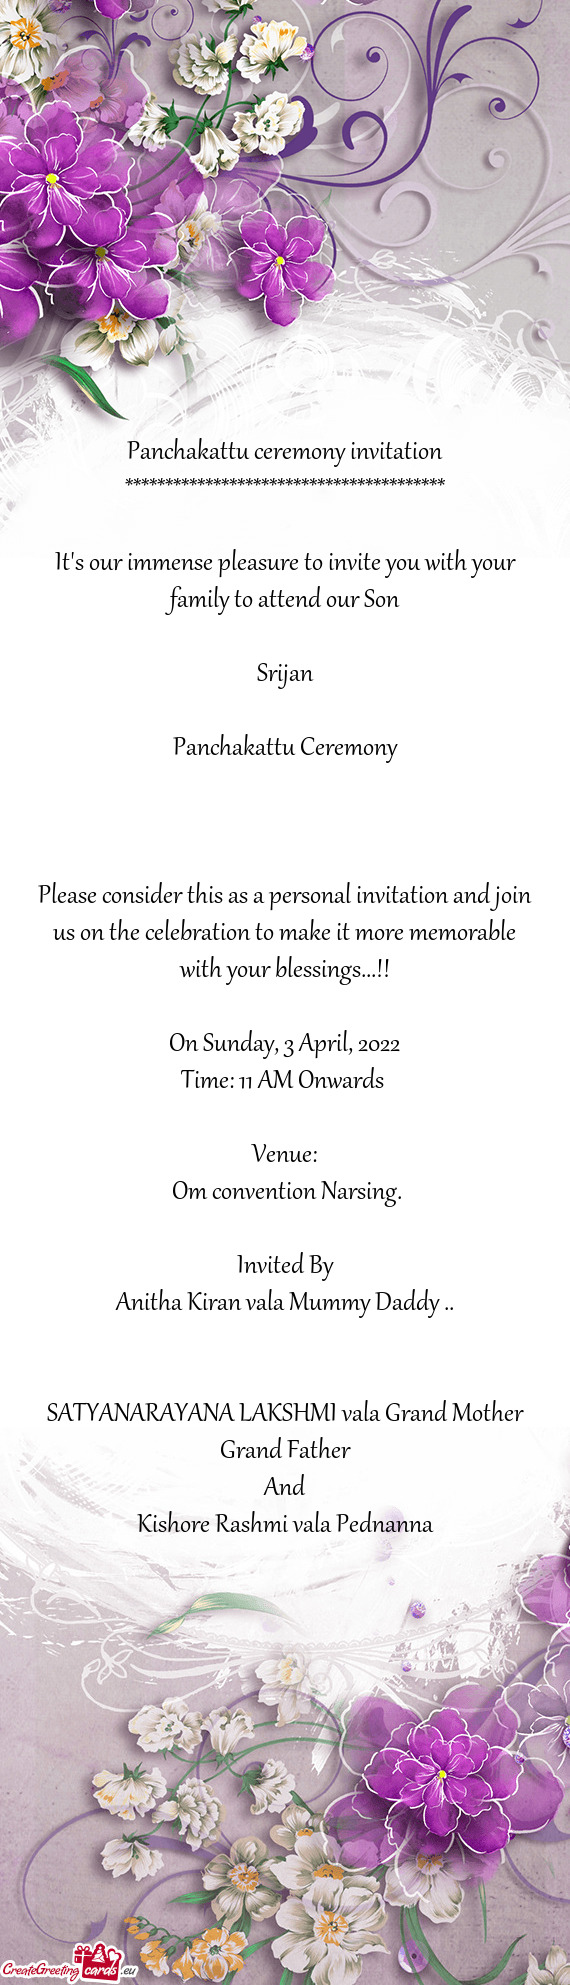 Panchakattu Ceremony